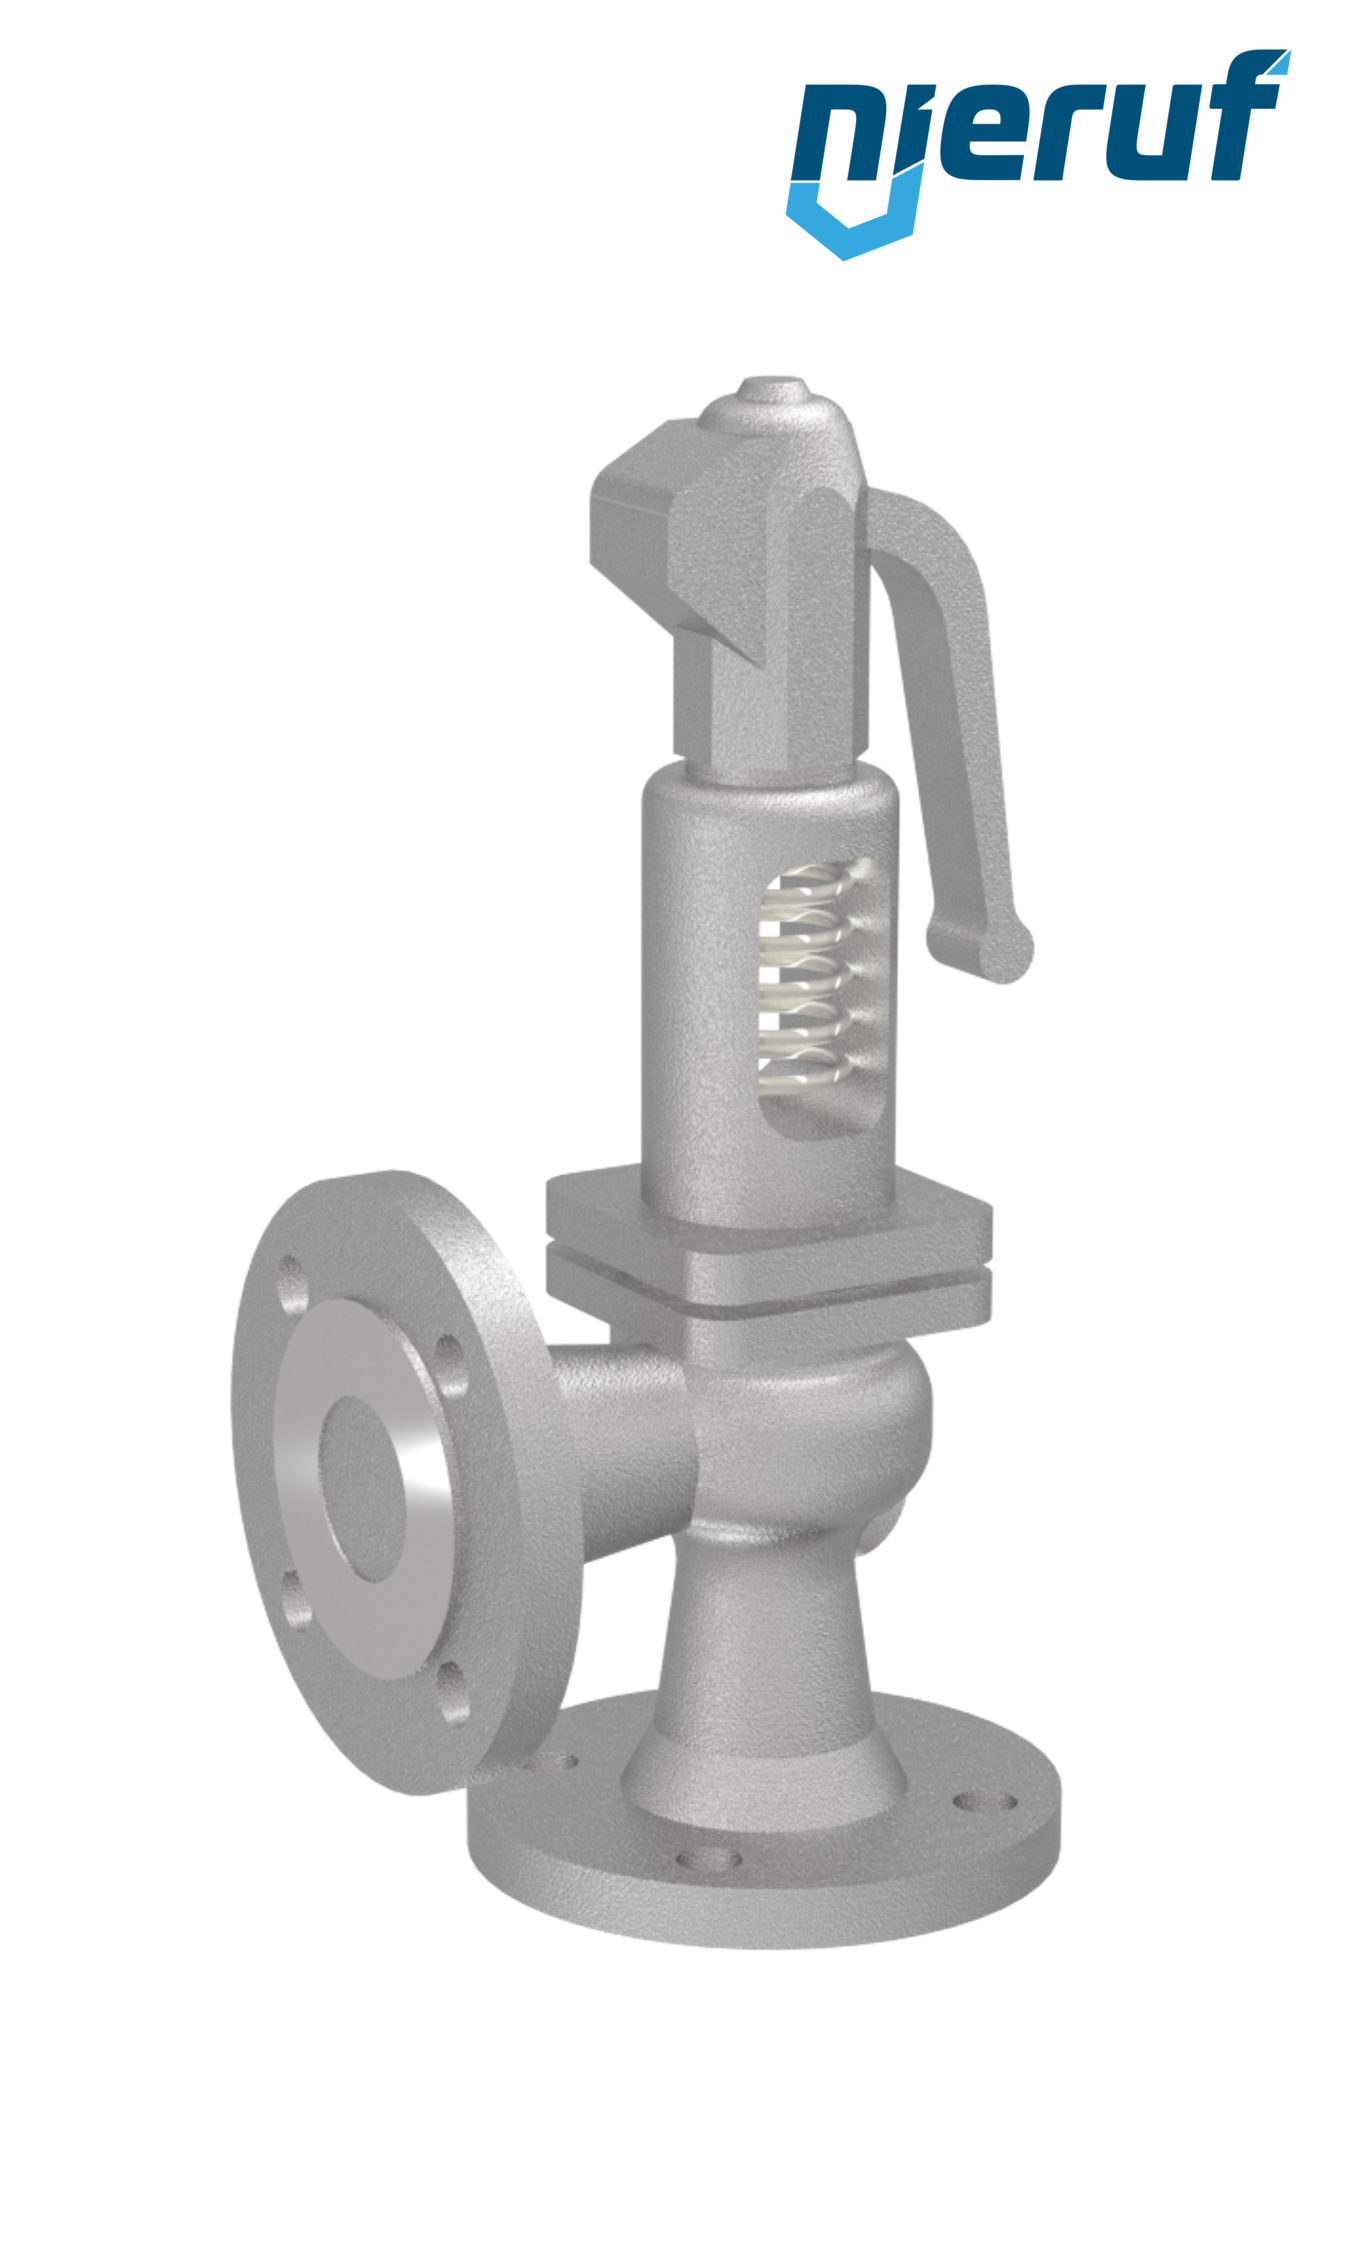 flange-safety valve DN65/DN65 SF0102, cast iron EN-JL1040 EPDM, with lever